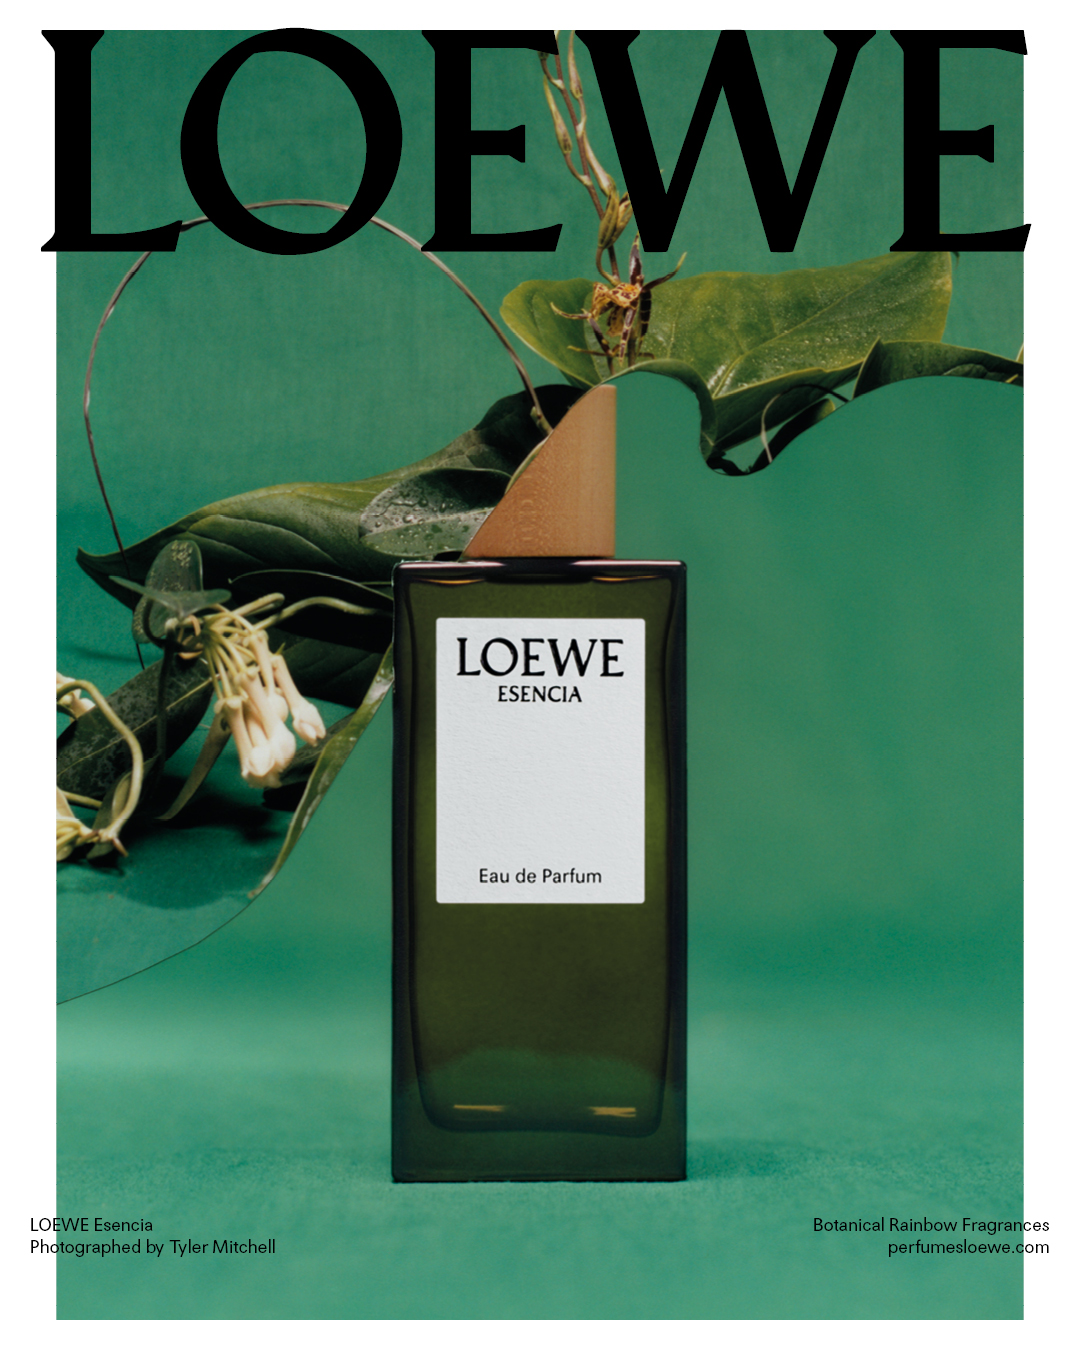 LOEWE Perfumes Botanical Rainbow con Úrsula Corberó, Greta Lee y Stephane  Bak - HIGHXTAR.